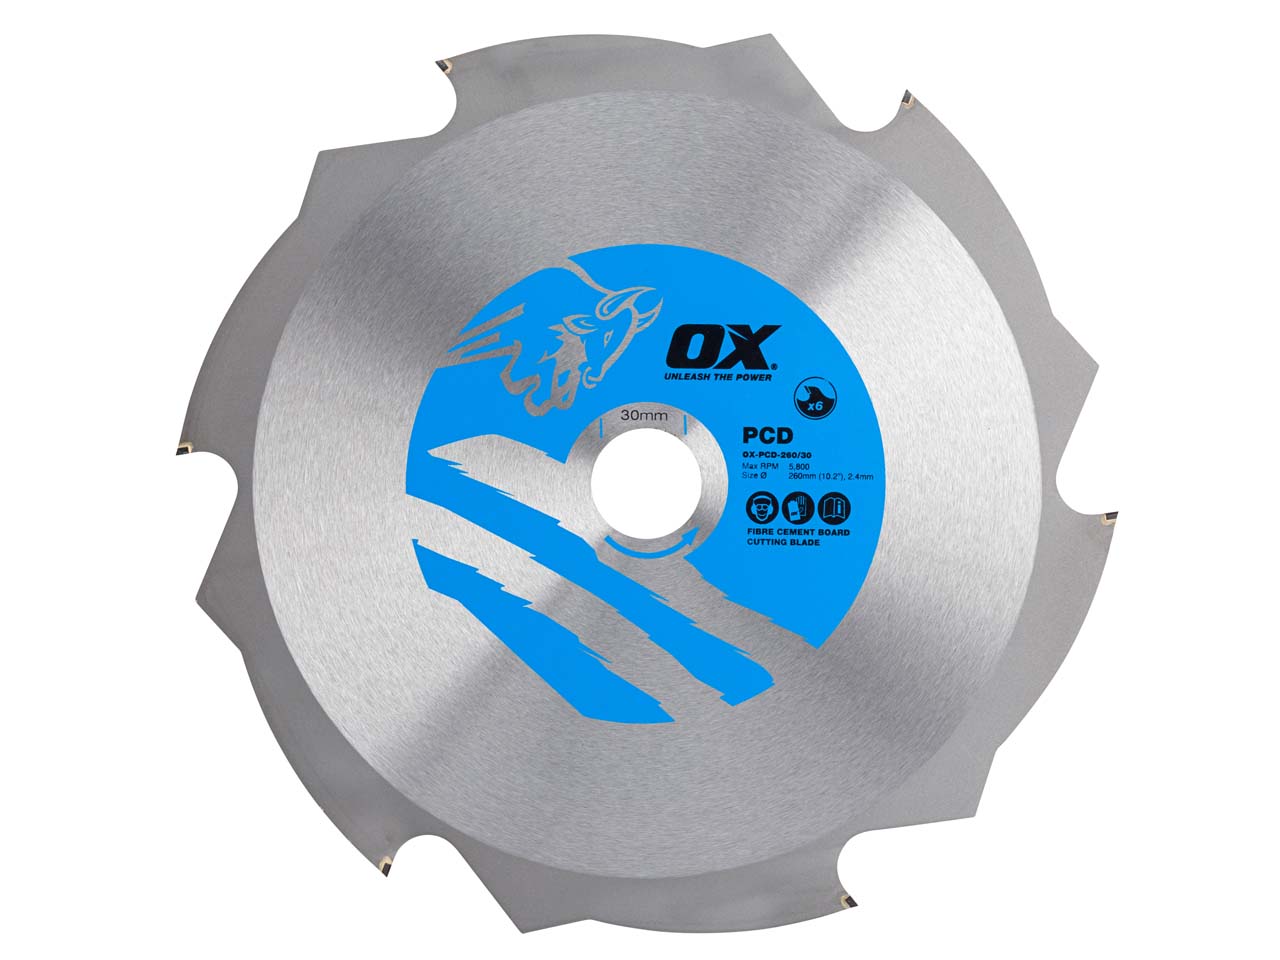 Ox Tools OX-PCD-260/30 Fibre Cement Cutting Blade 260mm x 30mm